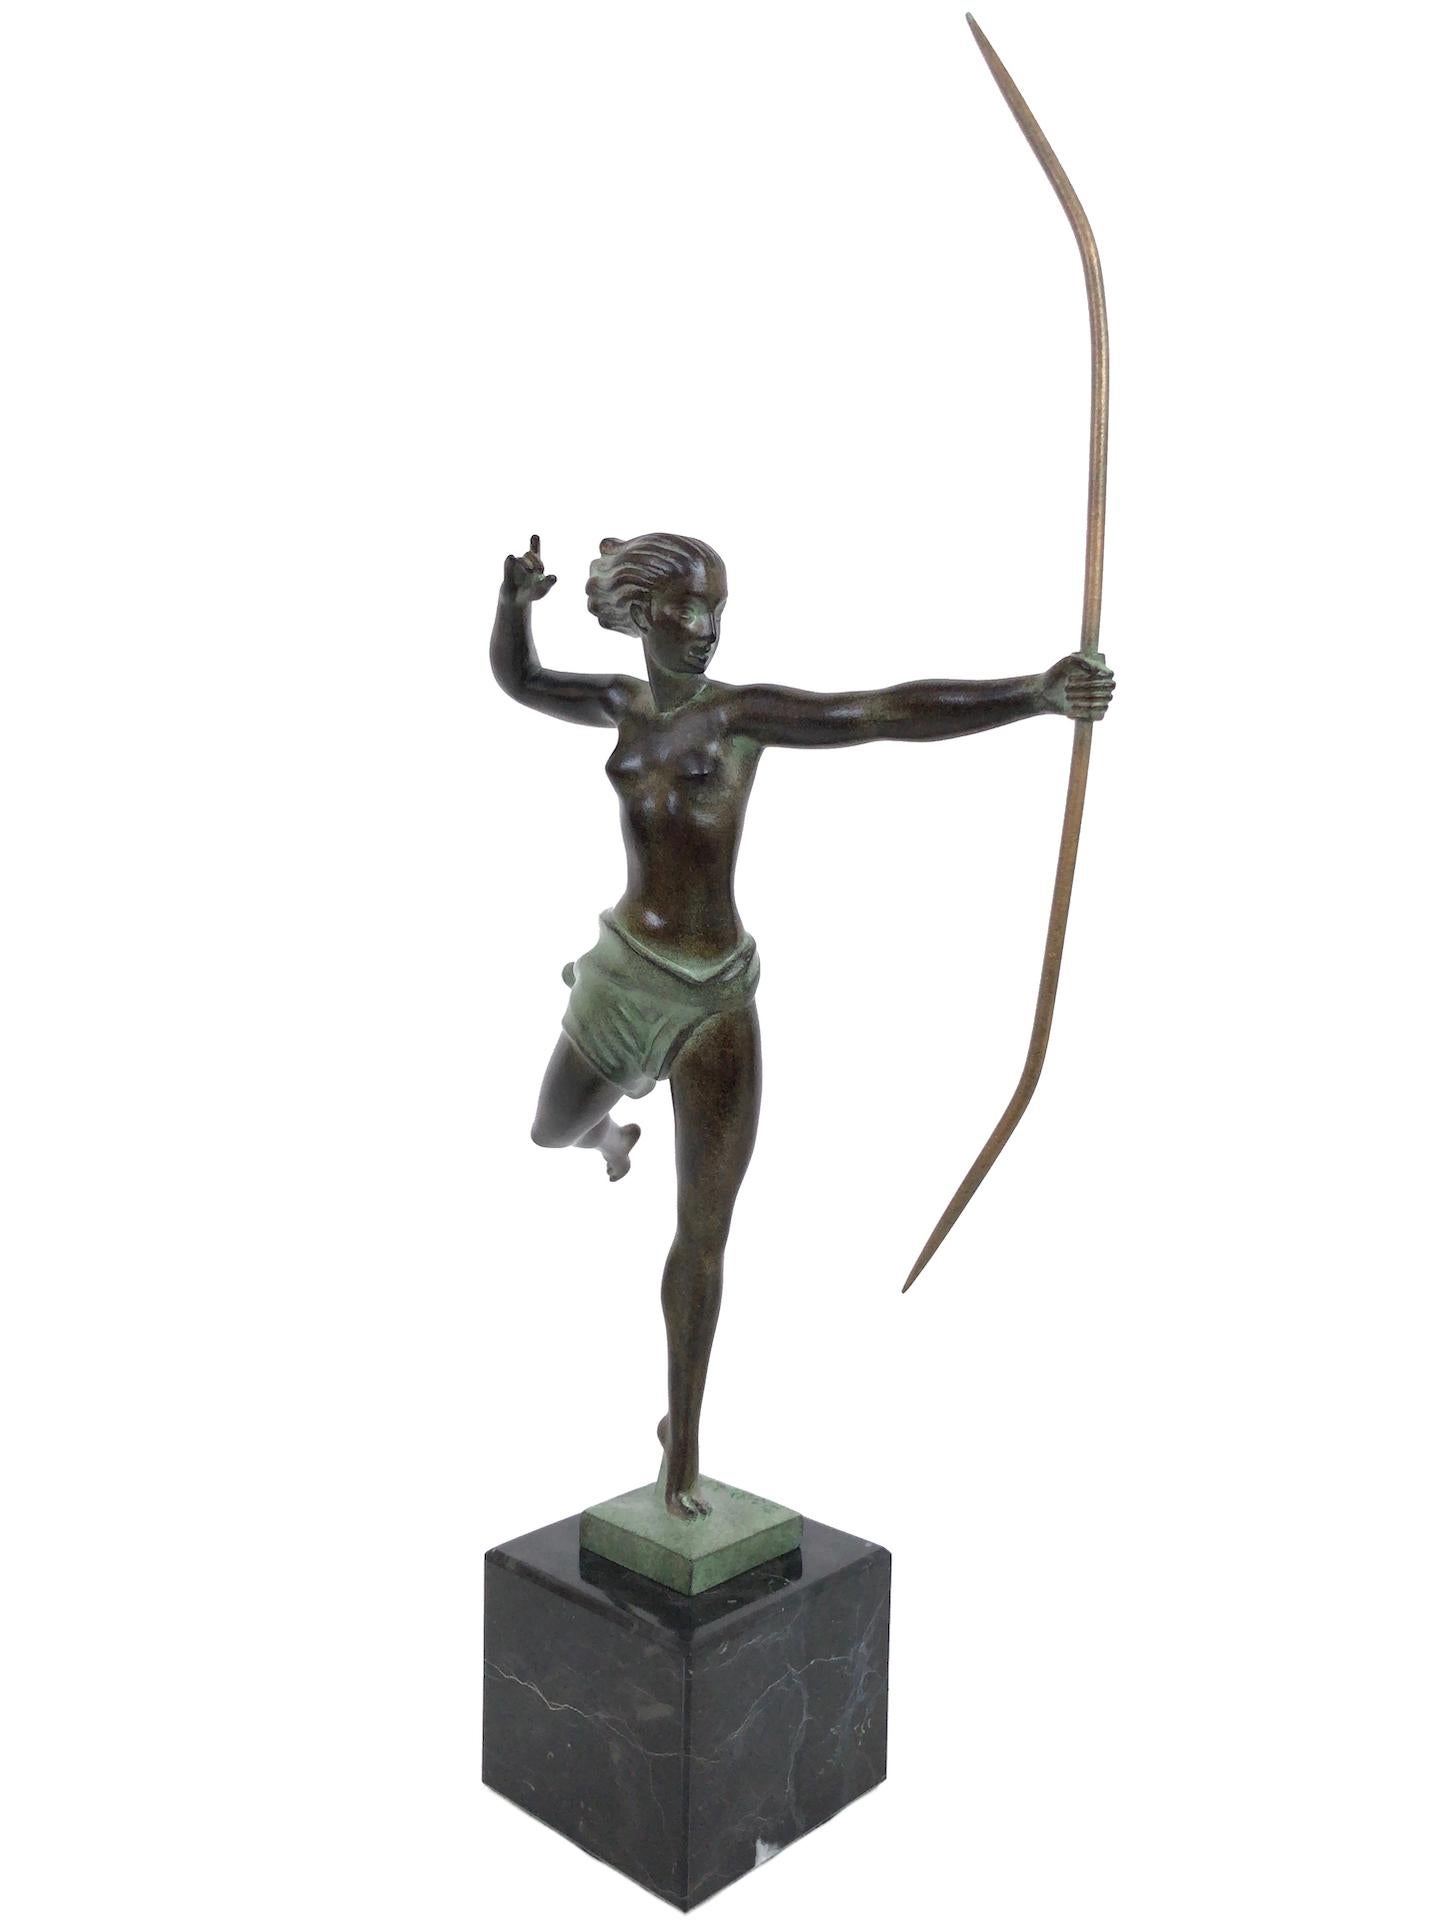 Archer, Amazon sculpture named 